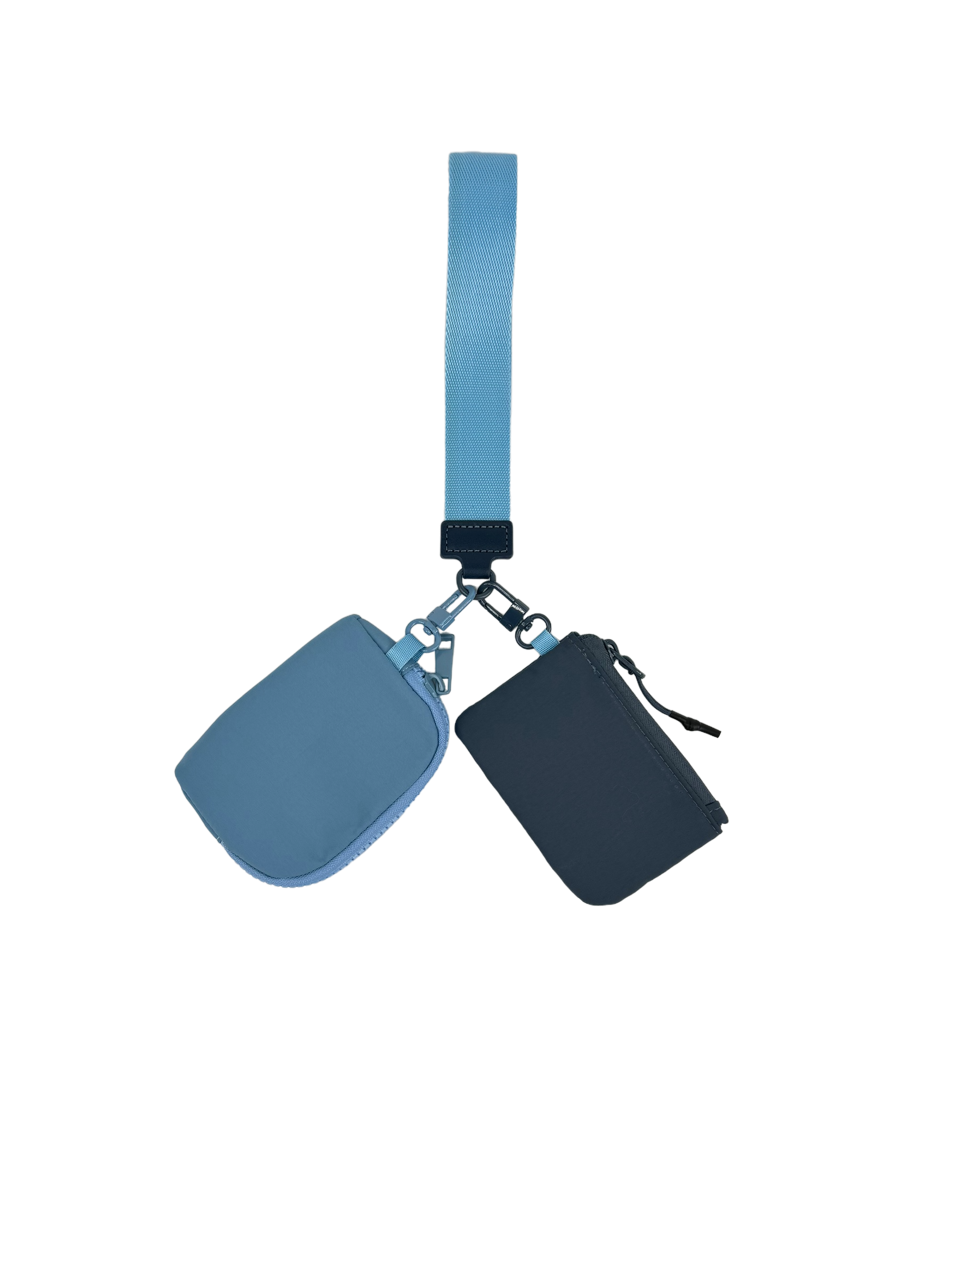 LL-4320 Wristlet Key Chain Double Pouch Blue Navy